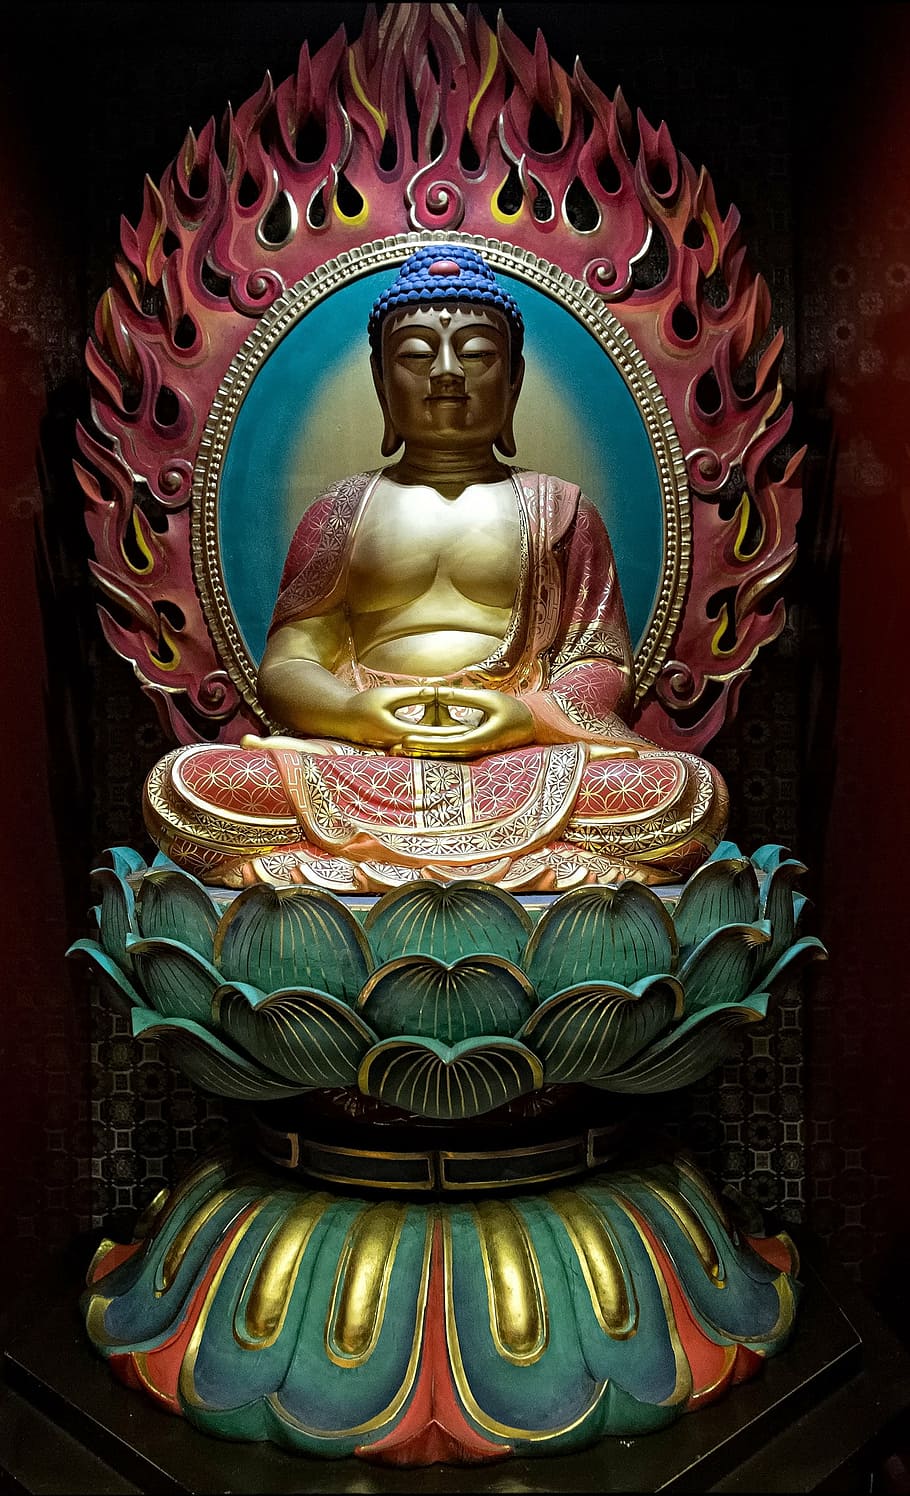 patung buddha gautama, pemujaan, tokoh, agama Buddha, agama, spiritual, budaya, kerohanian, asia, patung